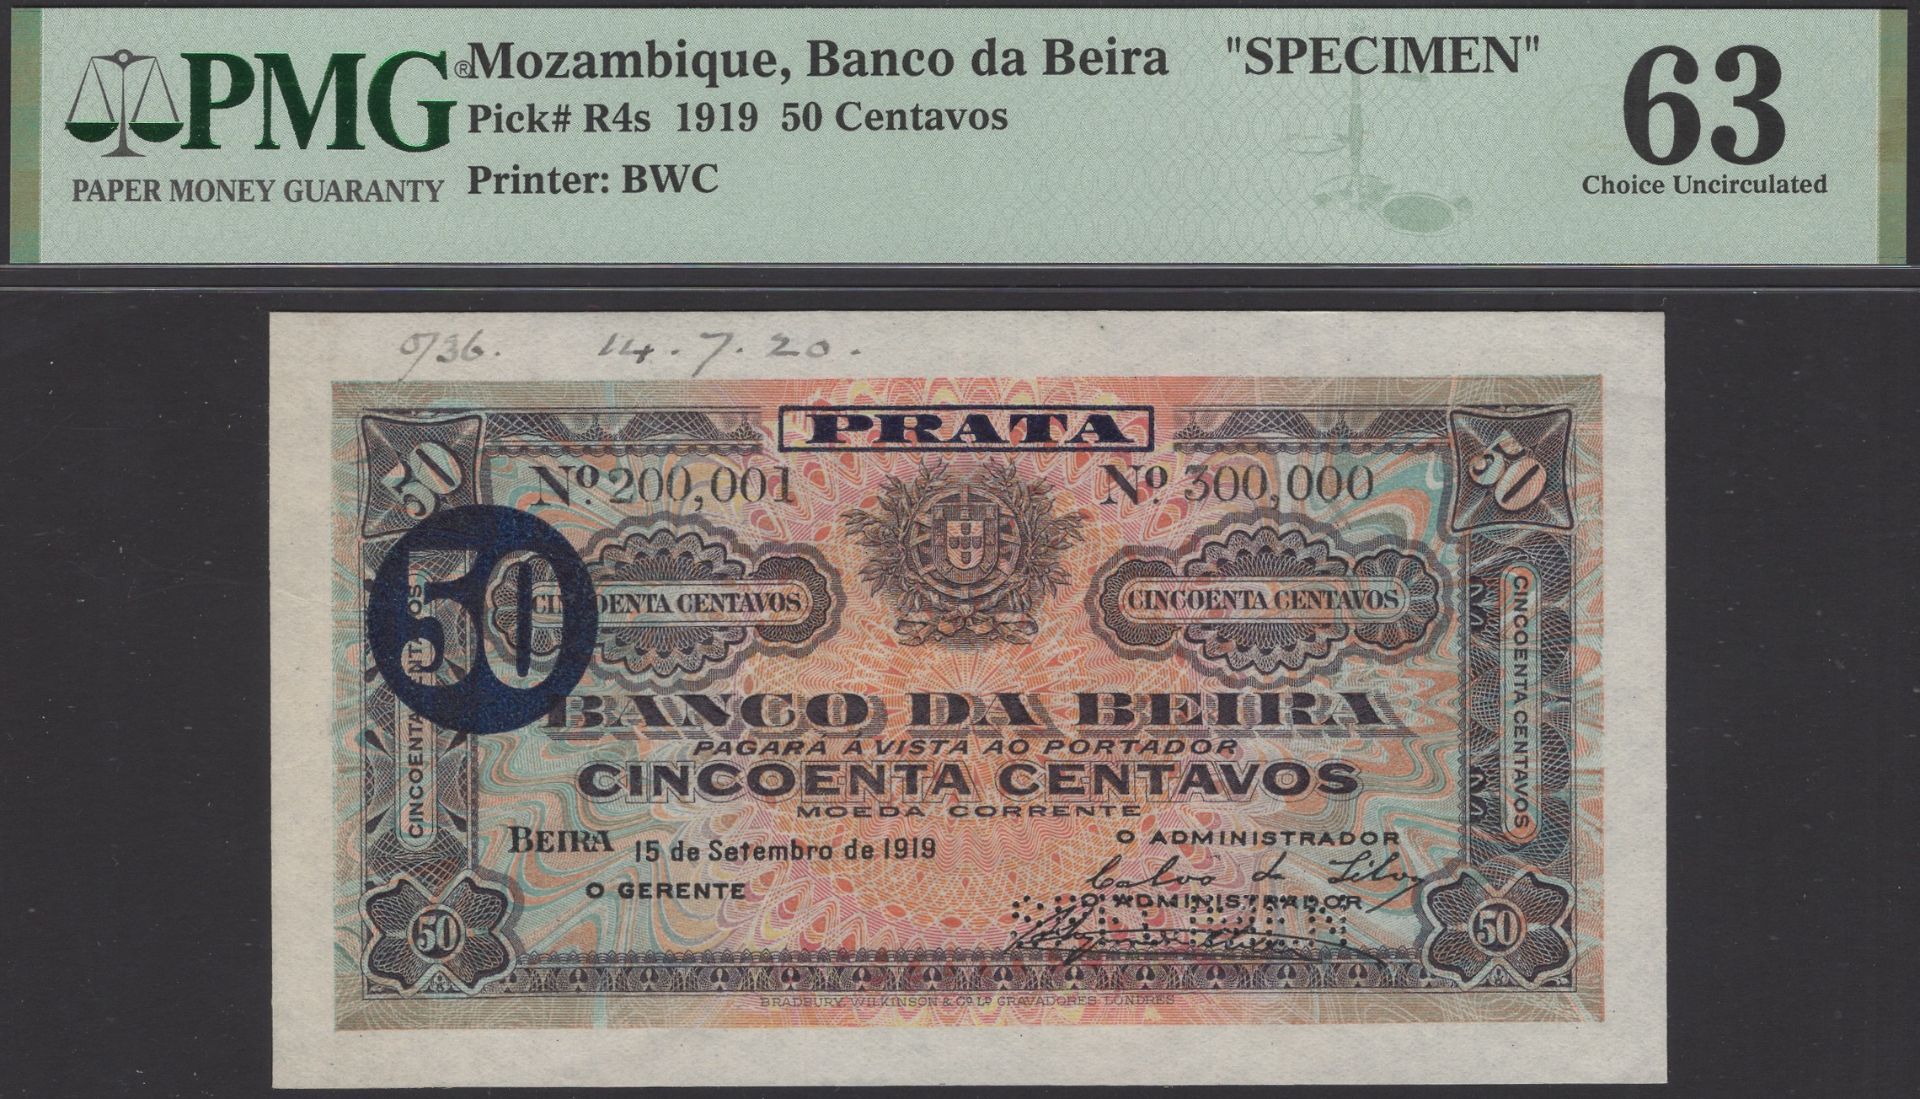 Banco da Beira, printers archival specimen 50 Centavos, 15 September 1919, serial number ran...